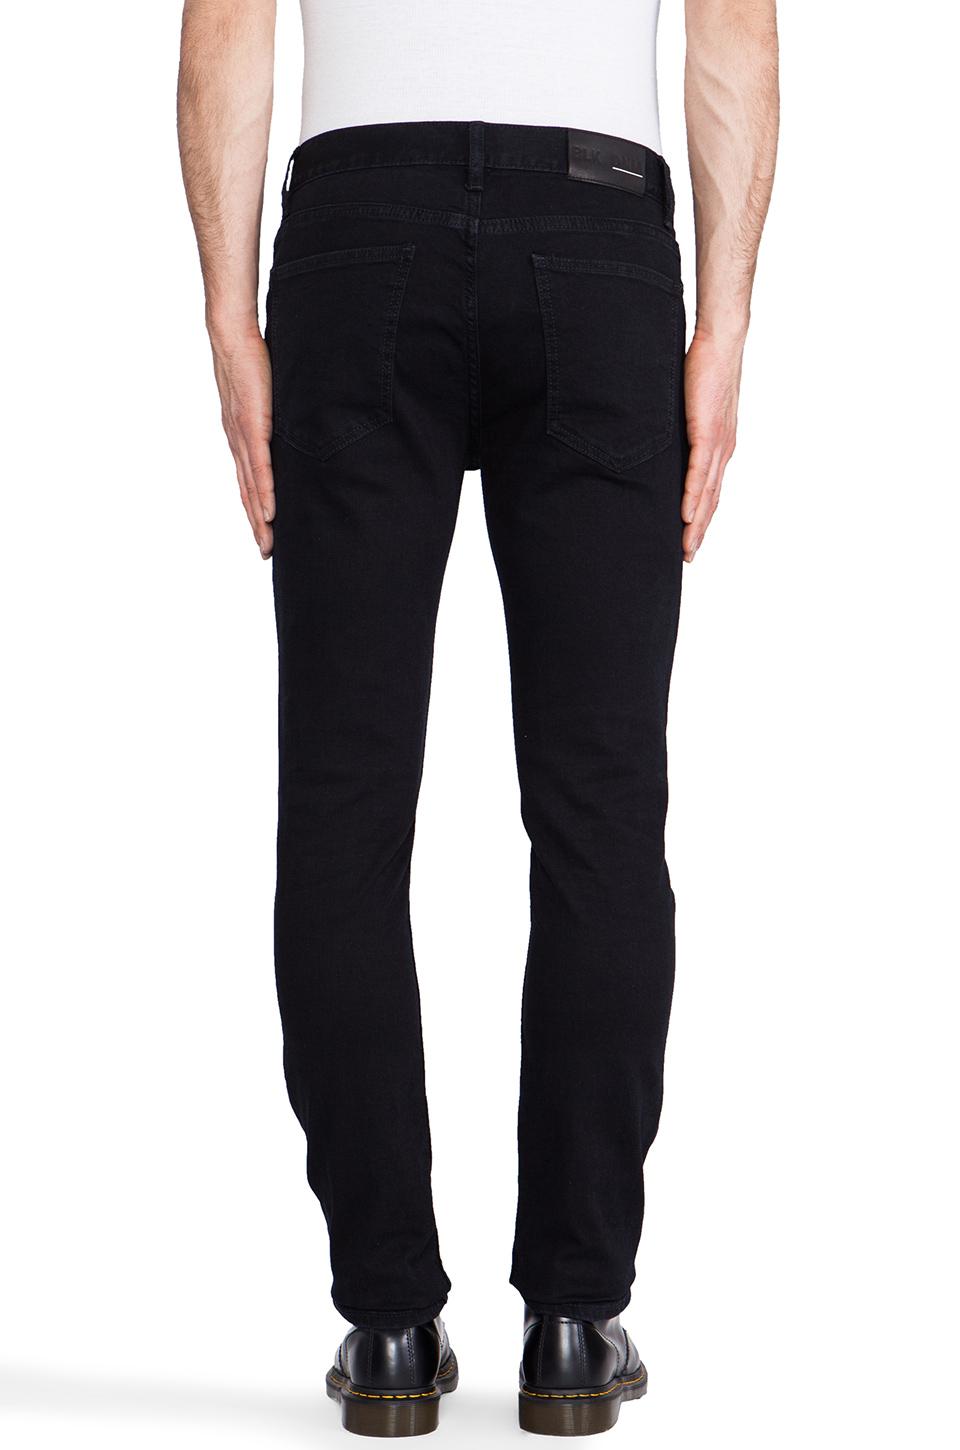 Lyst - BLK DNM Jeans 5 in Black for Men